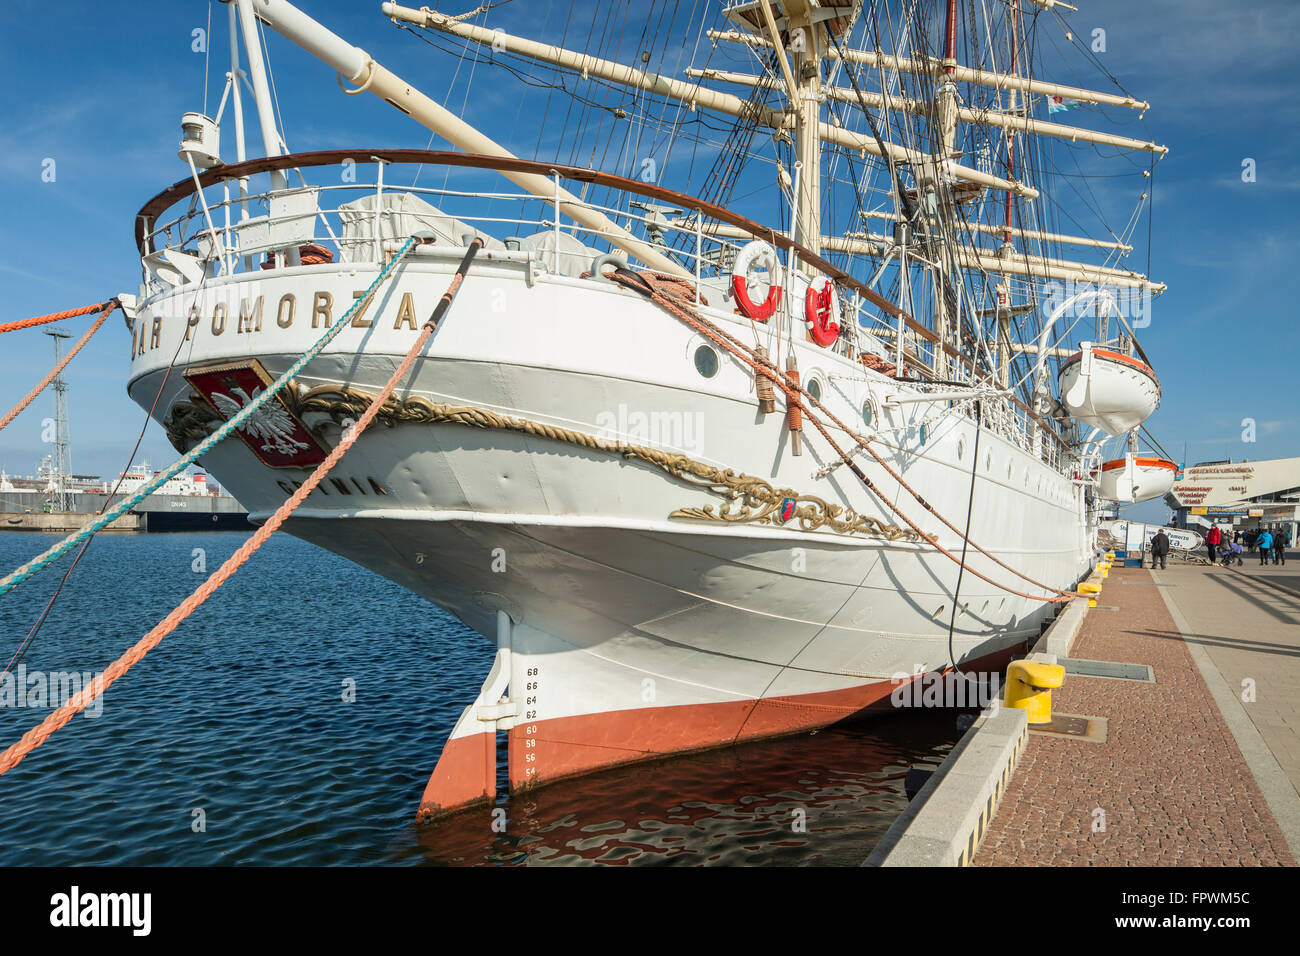 Historische Segel Schiff "Dar Pomorza" in Gdynia, Polen. Stockfoto